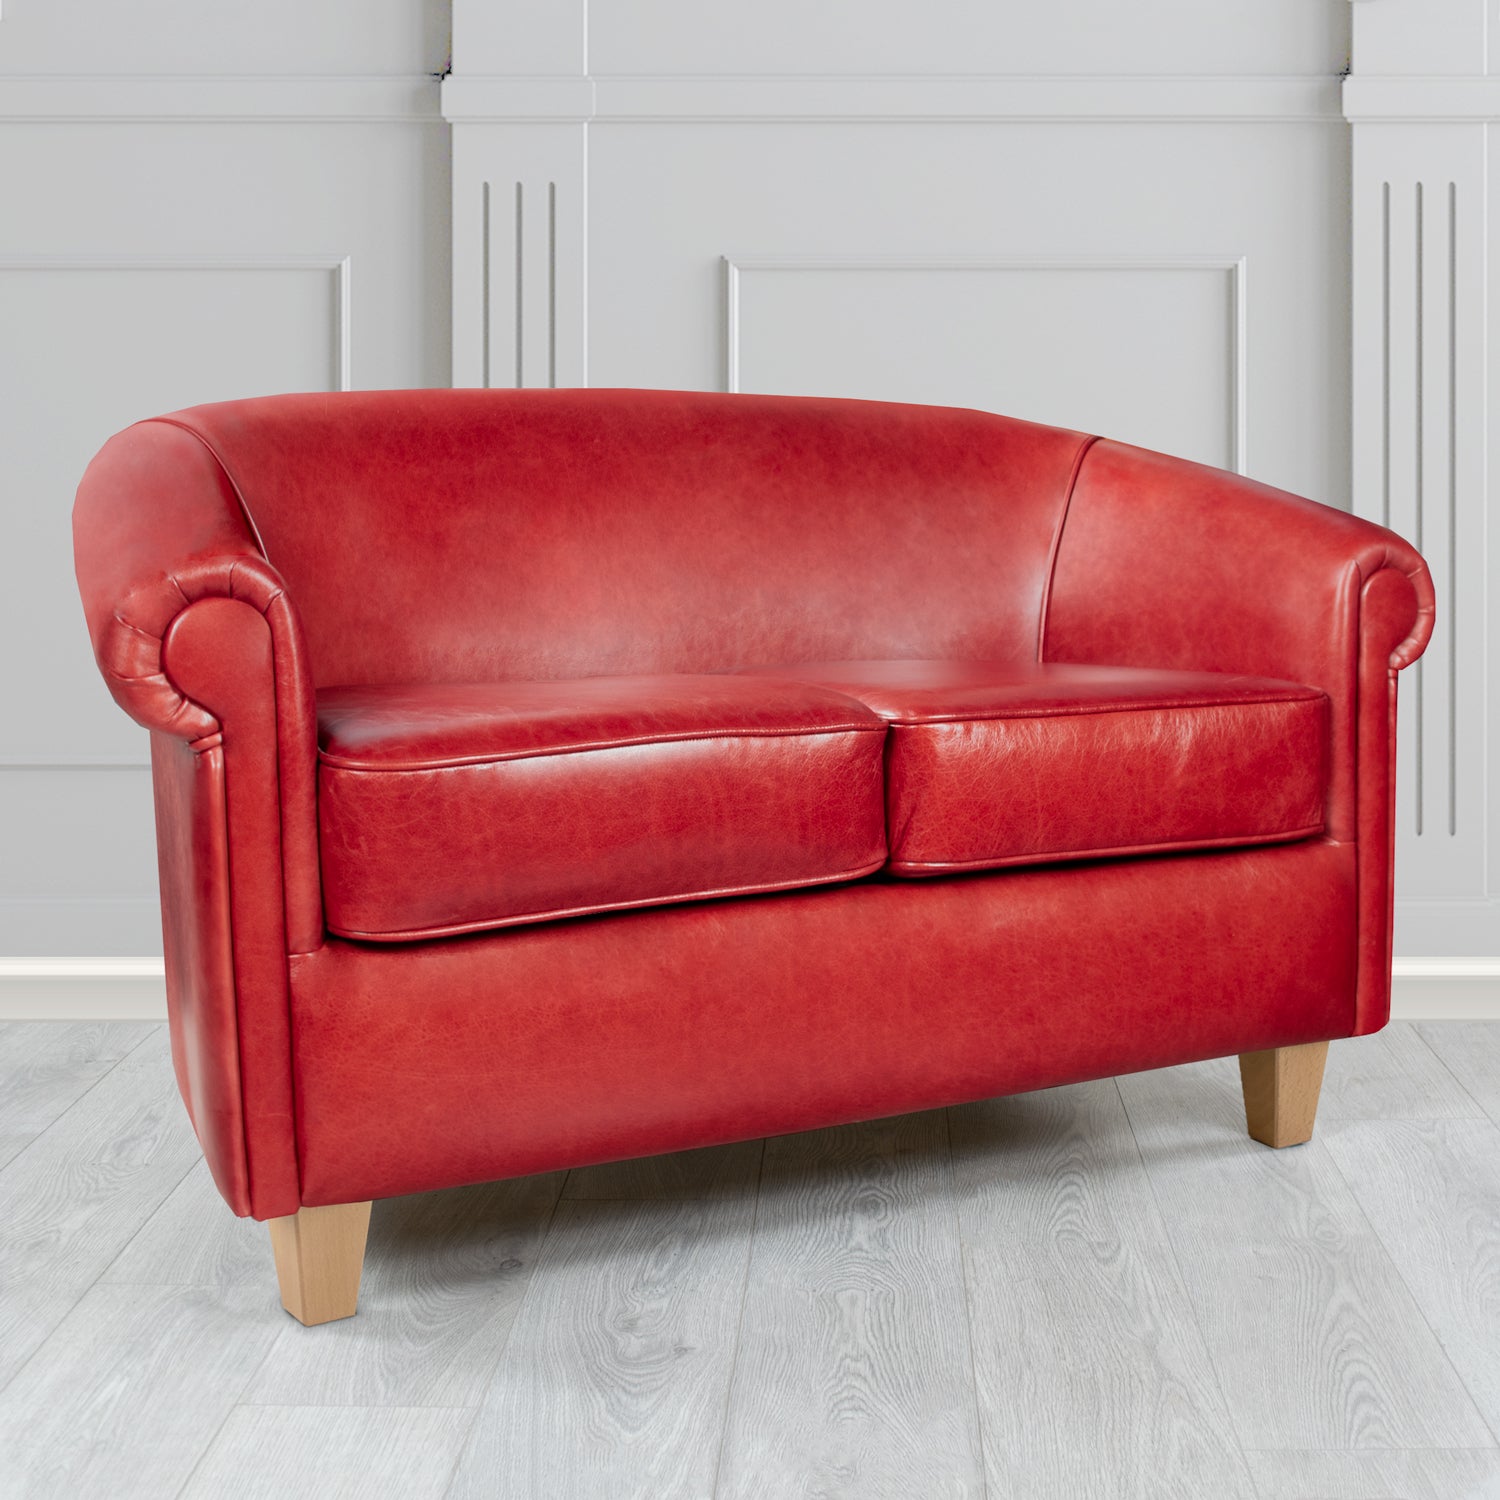 Siena 2 Seater Tub Sofa in Crib 5 Old English Crimson Genuine Leather - The Tub Chair Shop